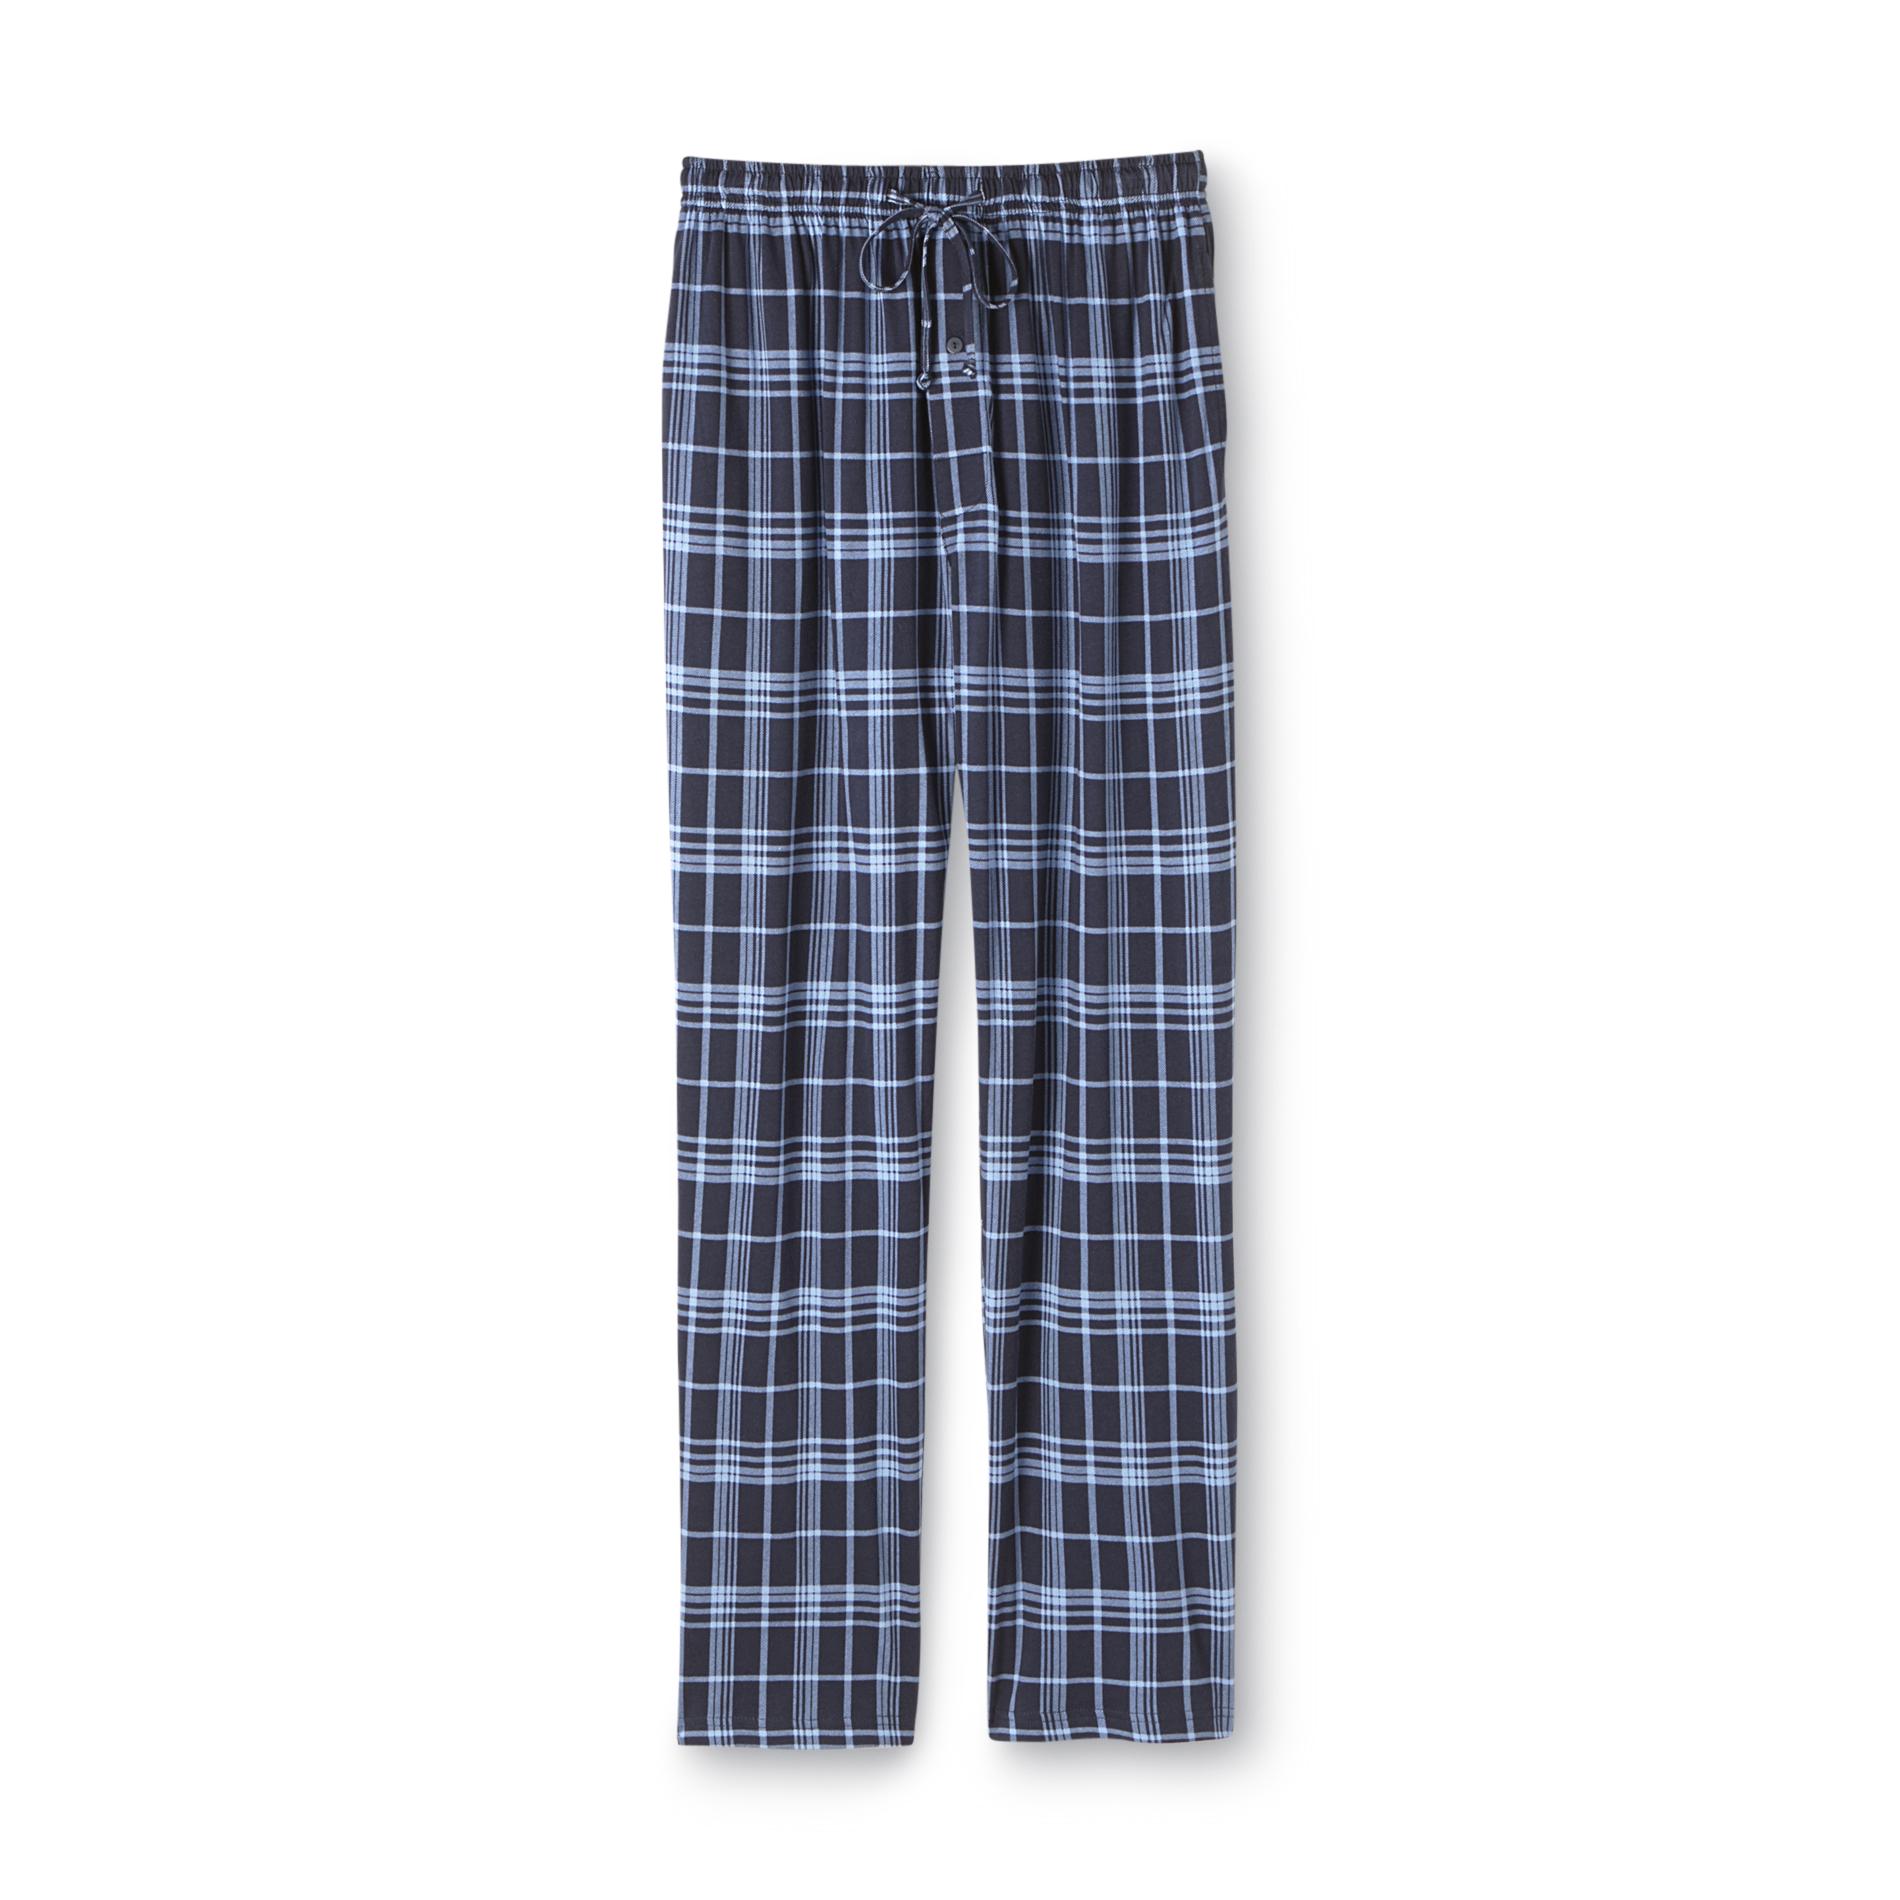 Covington Men's Pajama Pants - Plaid